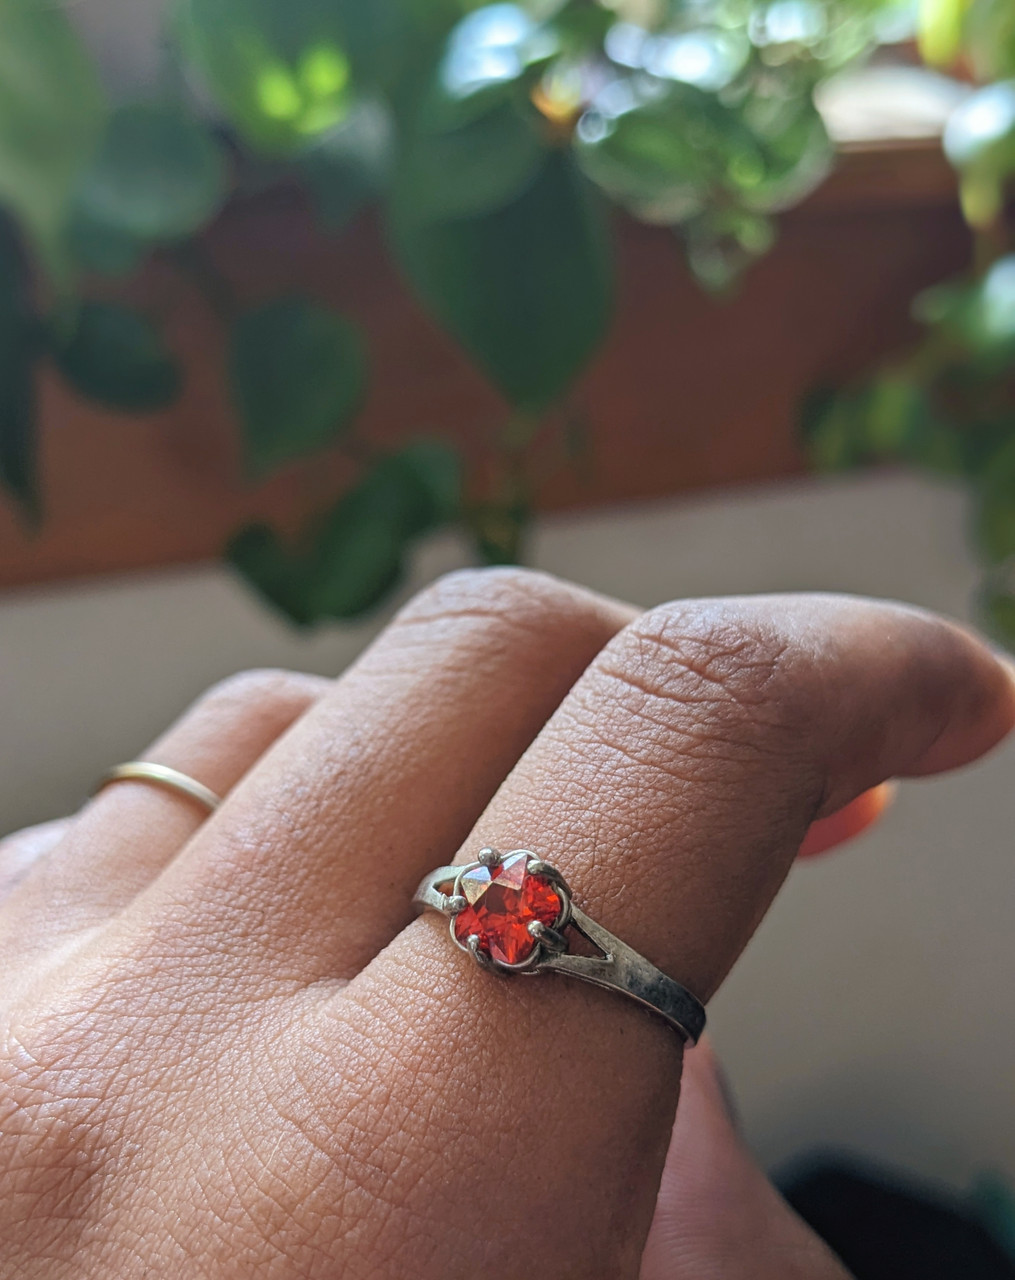 Star Shape Ring, Designer Classic Ring, Halo Rings, Engagement Unique Ring,  | eBay